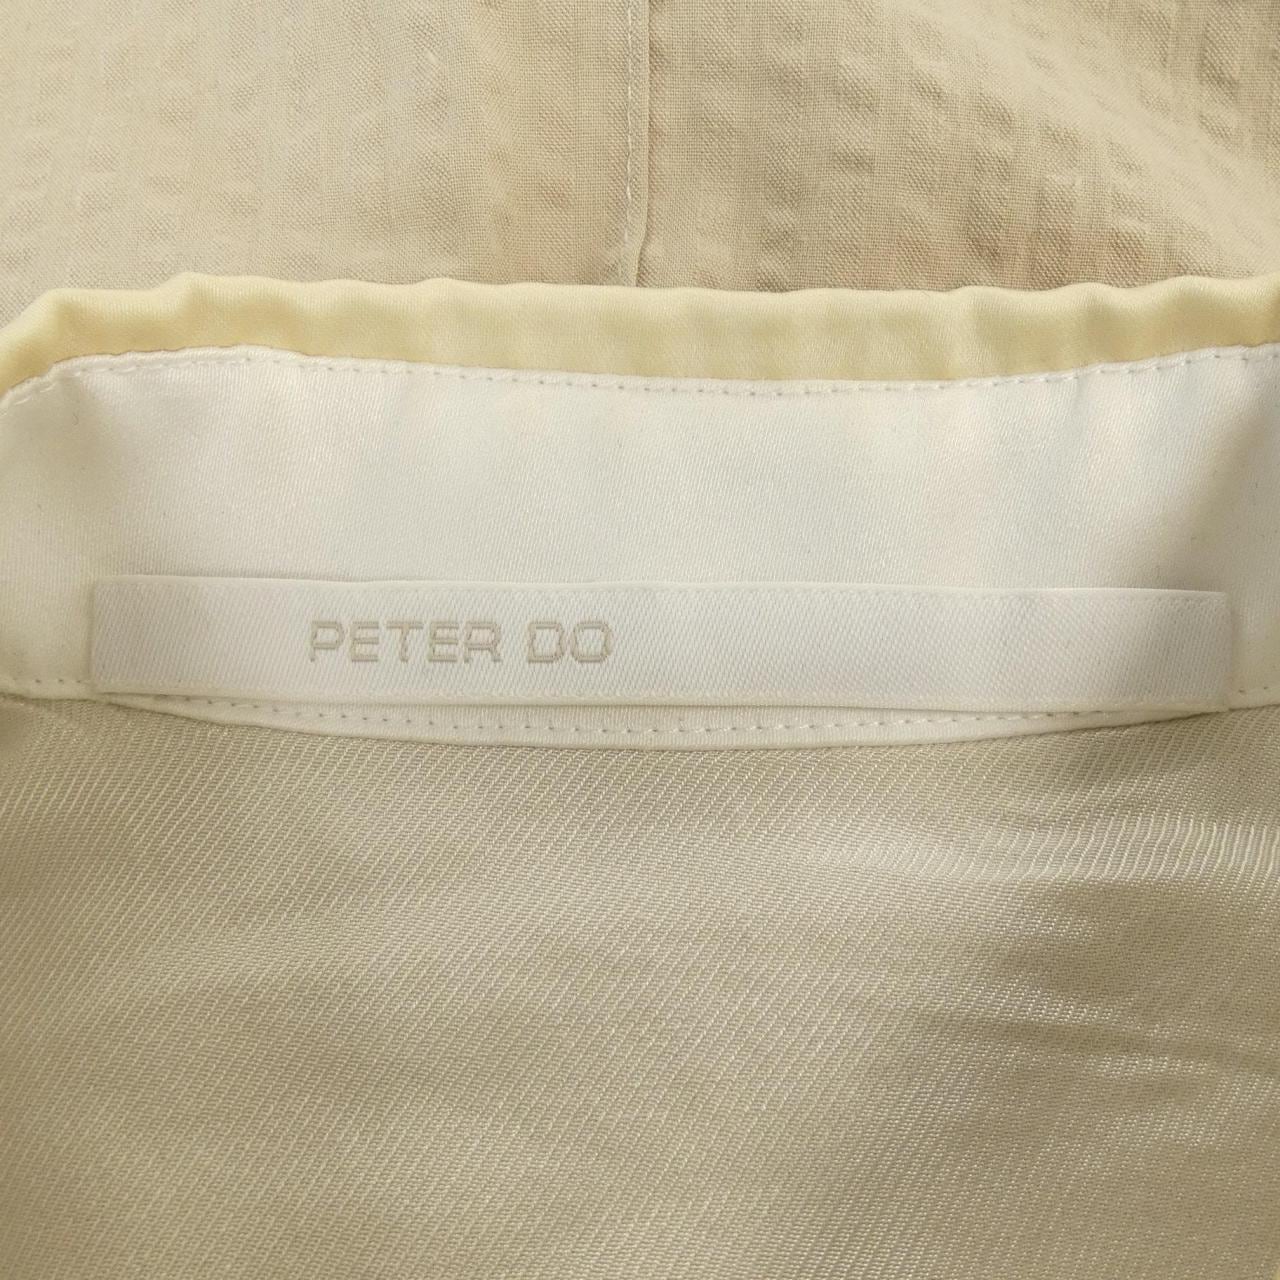 PETER DO DO shirt